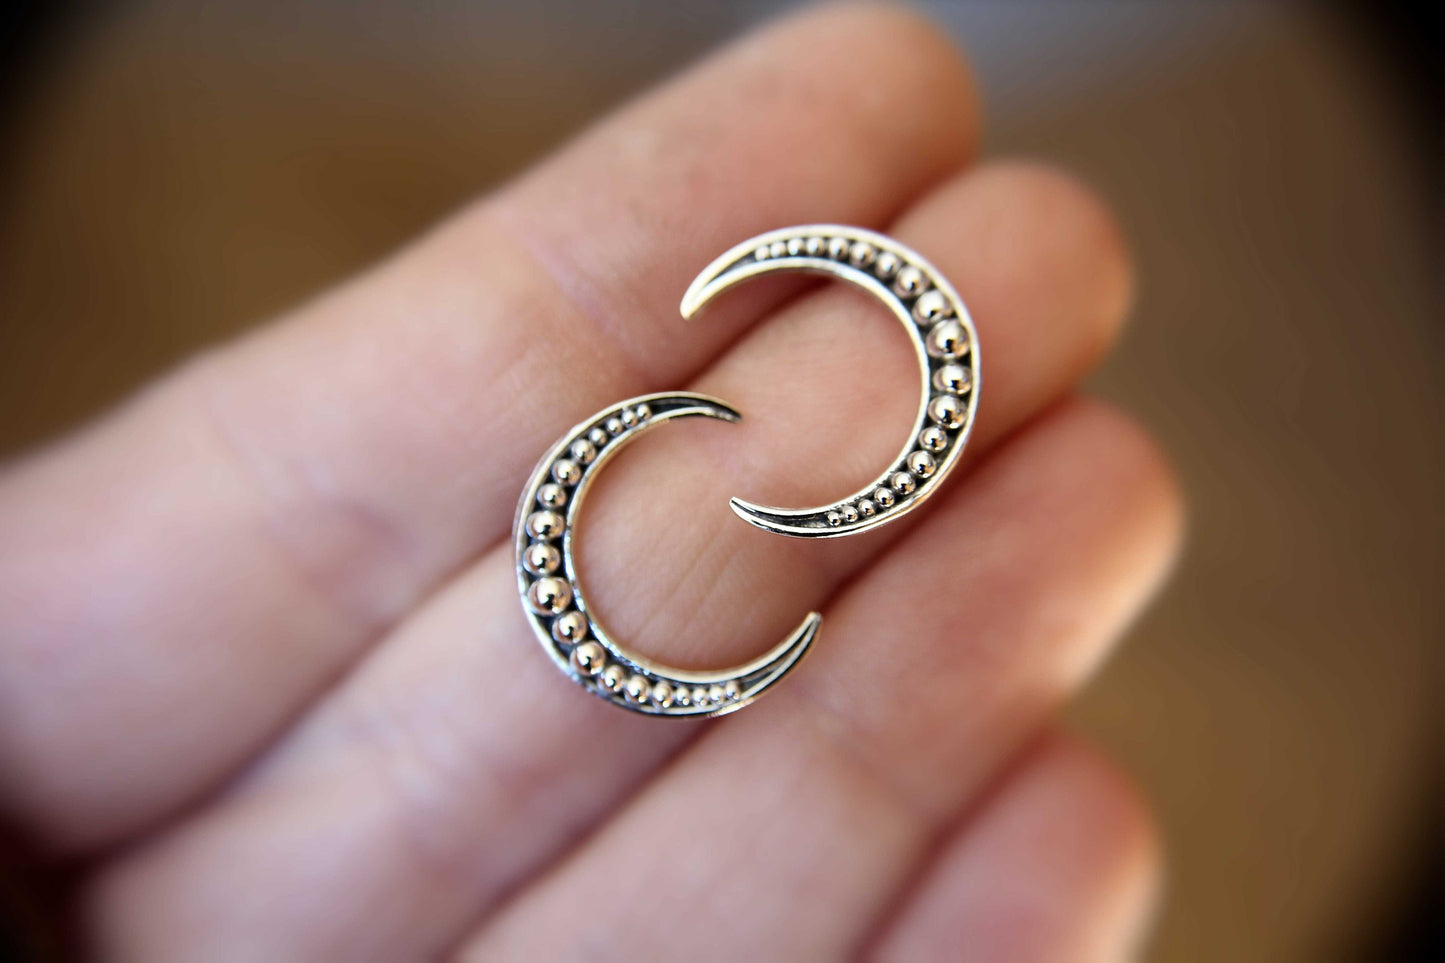 Crescent Moon Earrings, Crescent Earrings, Moon Stud Earrings, Crescent Stud Earrings, Beaded Moon Earrings, Boho Chic, Moon Jewelry, Gift